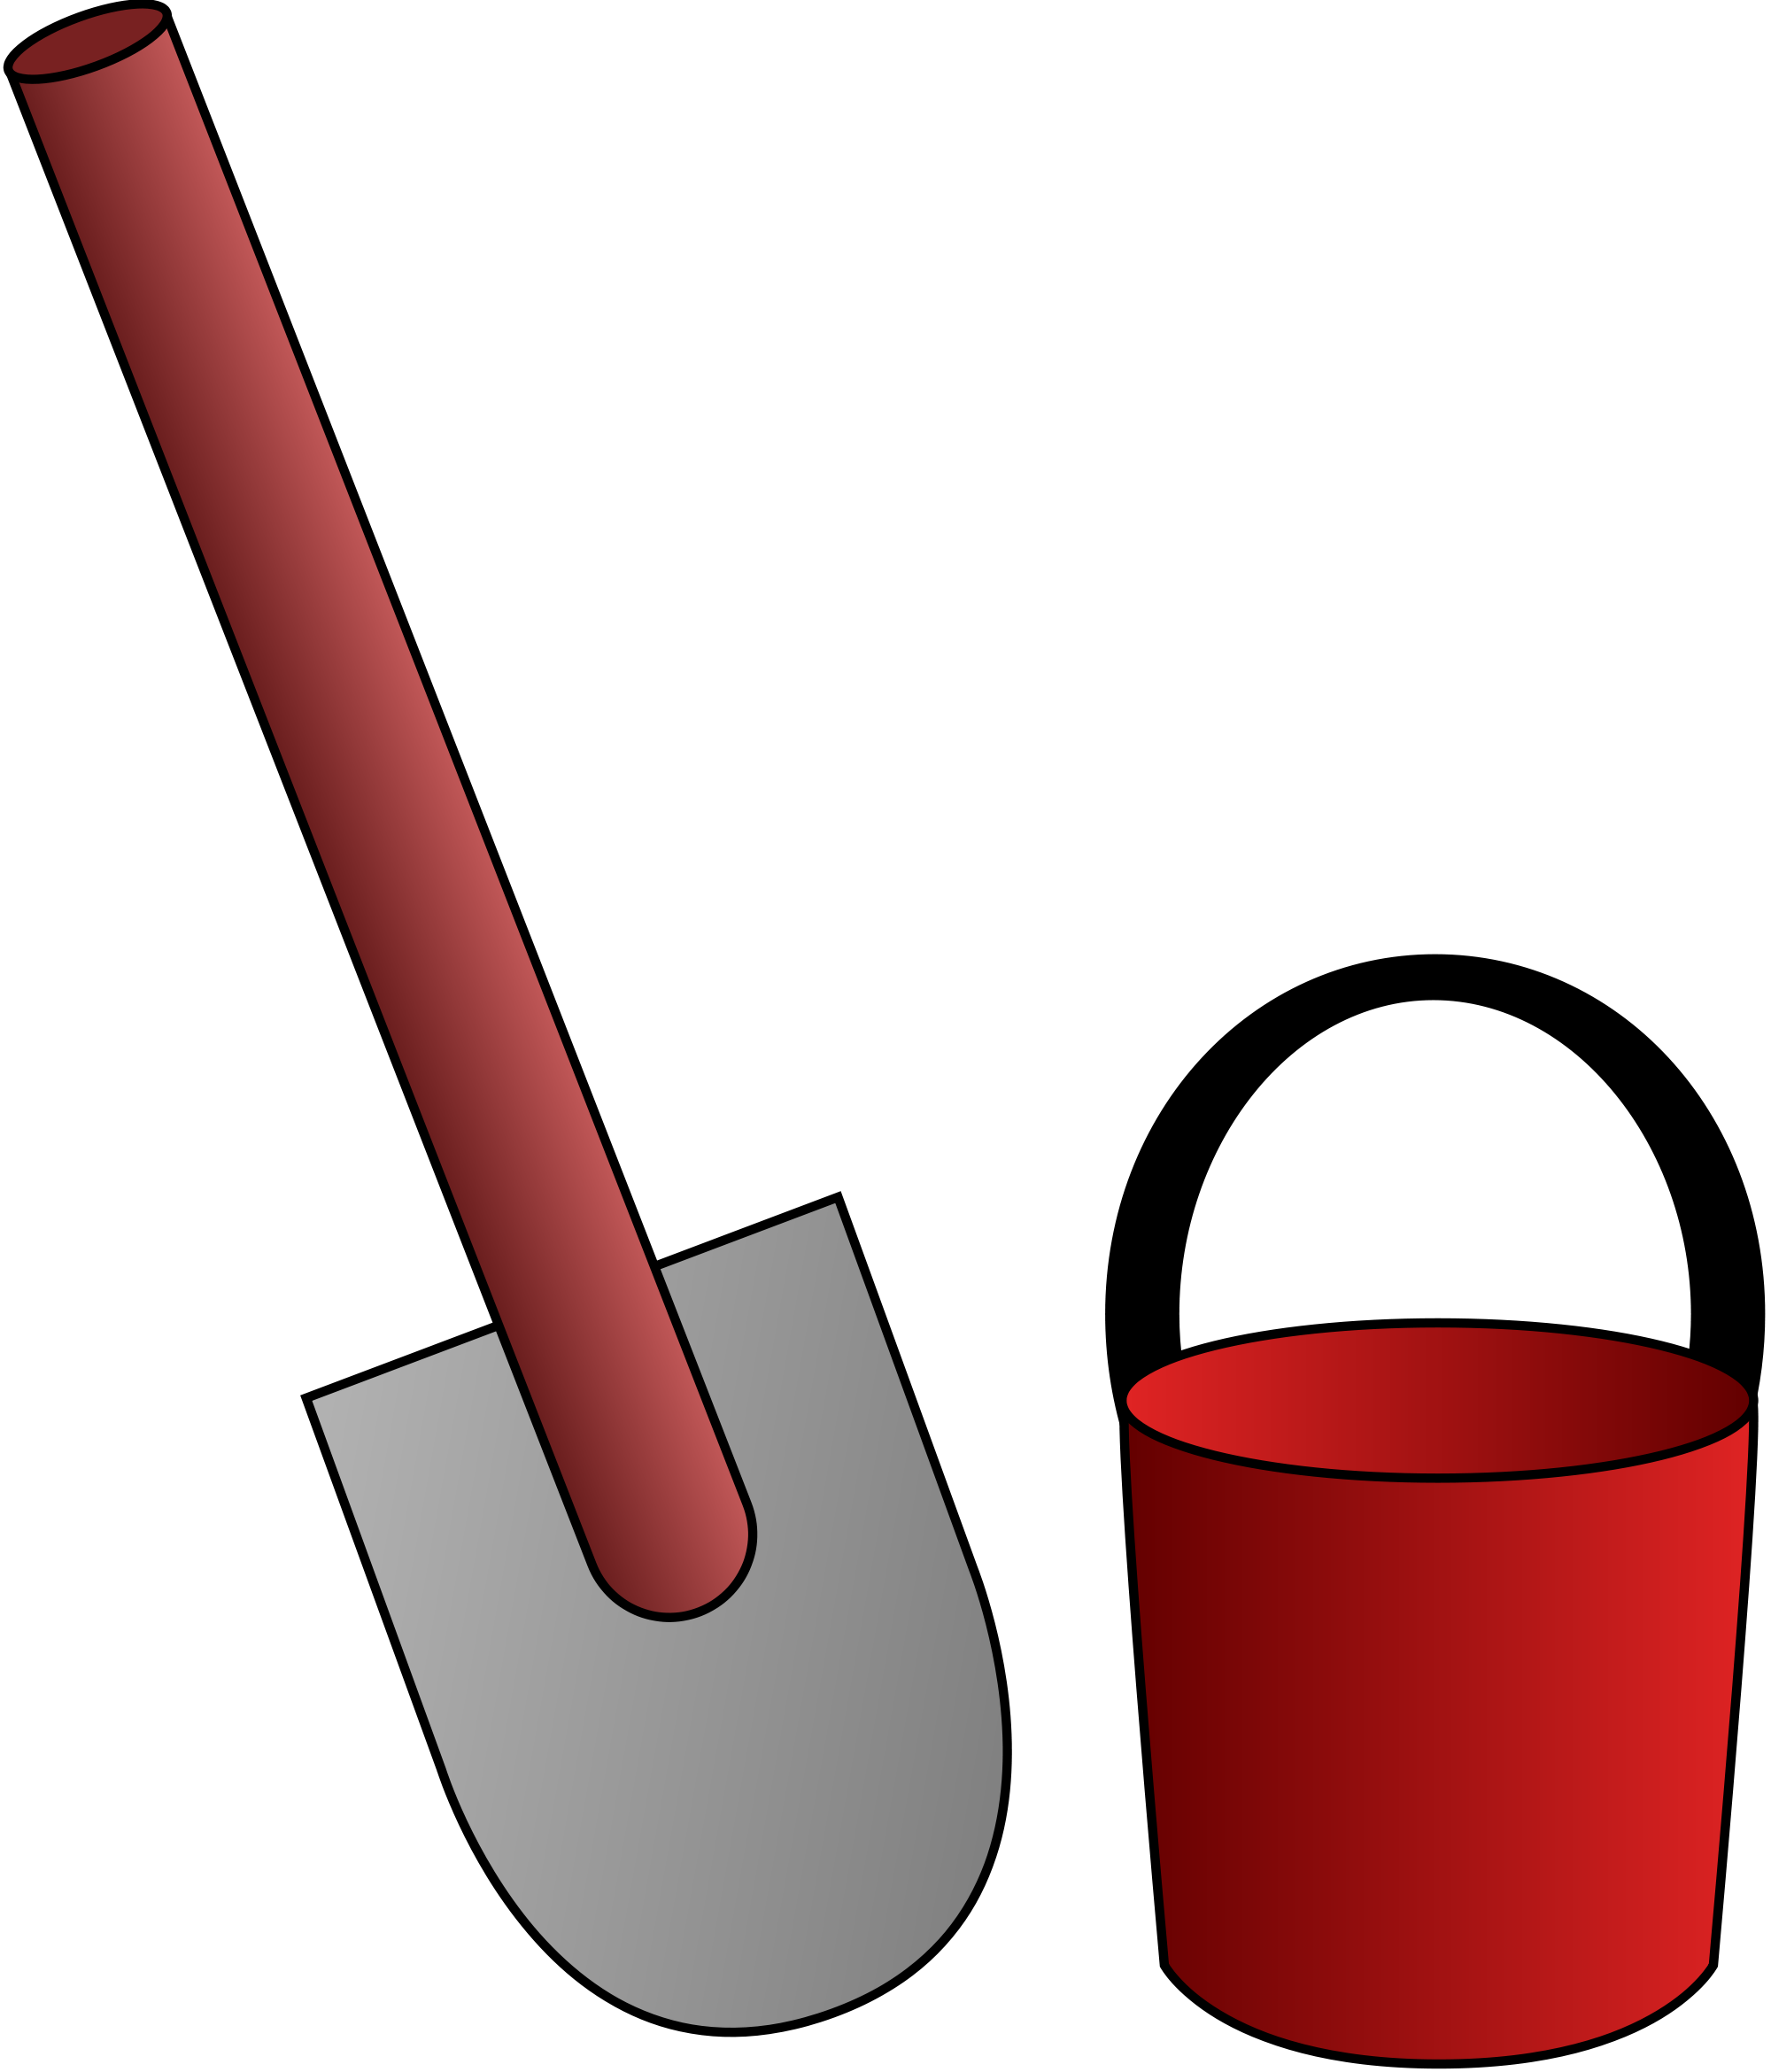 tool clipart spade